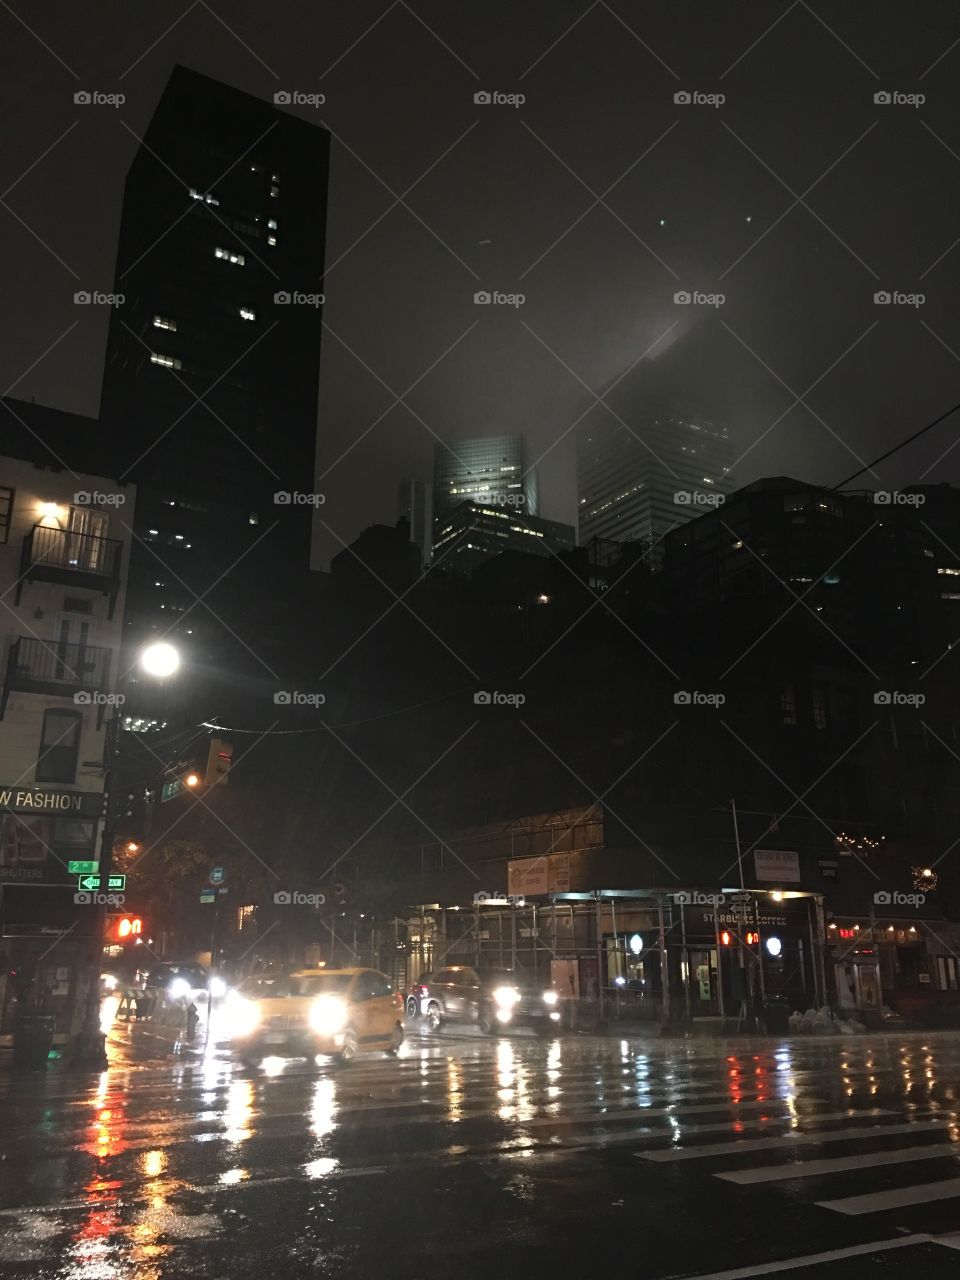 New York street on a rainy night.